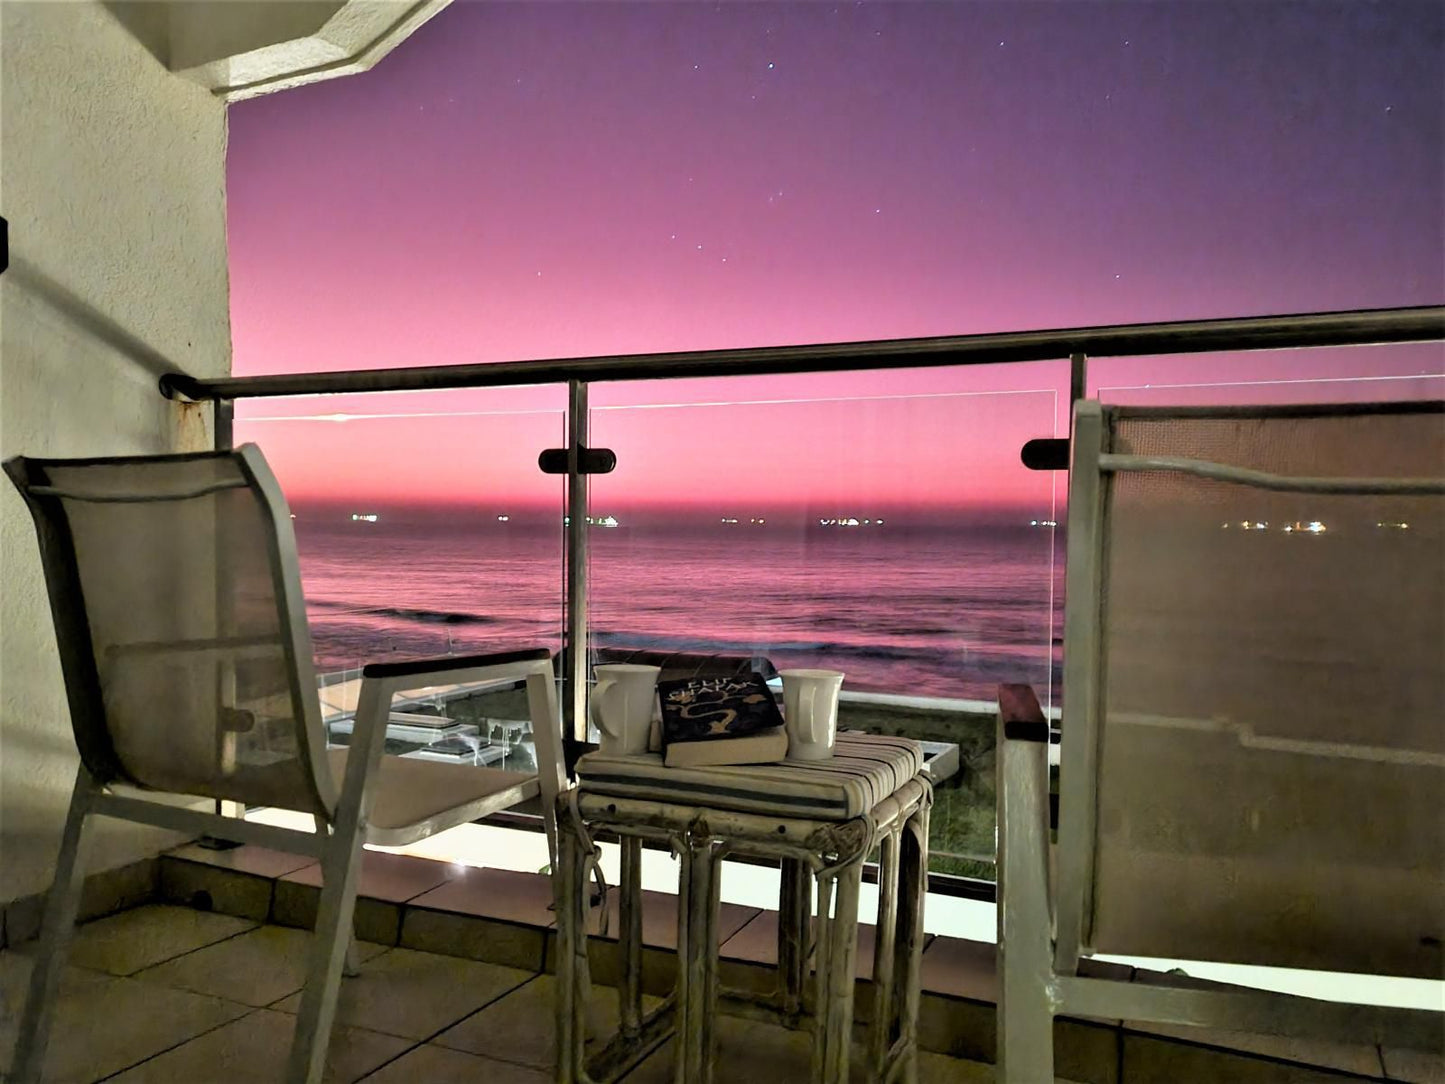 405 Bermudas Umhlanga Durban Kwazulu Natal South Africa Beach, Nature, Sand, Framing, Sunset, Sky